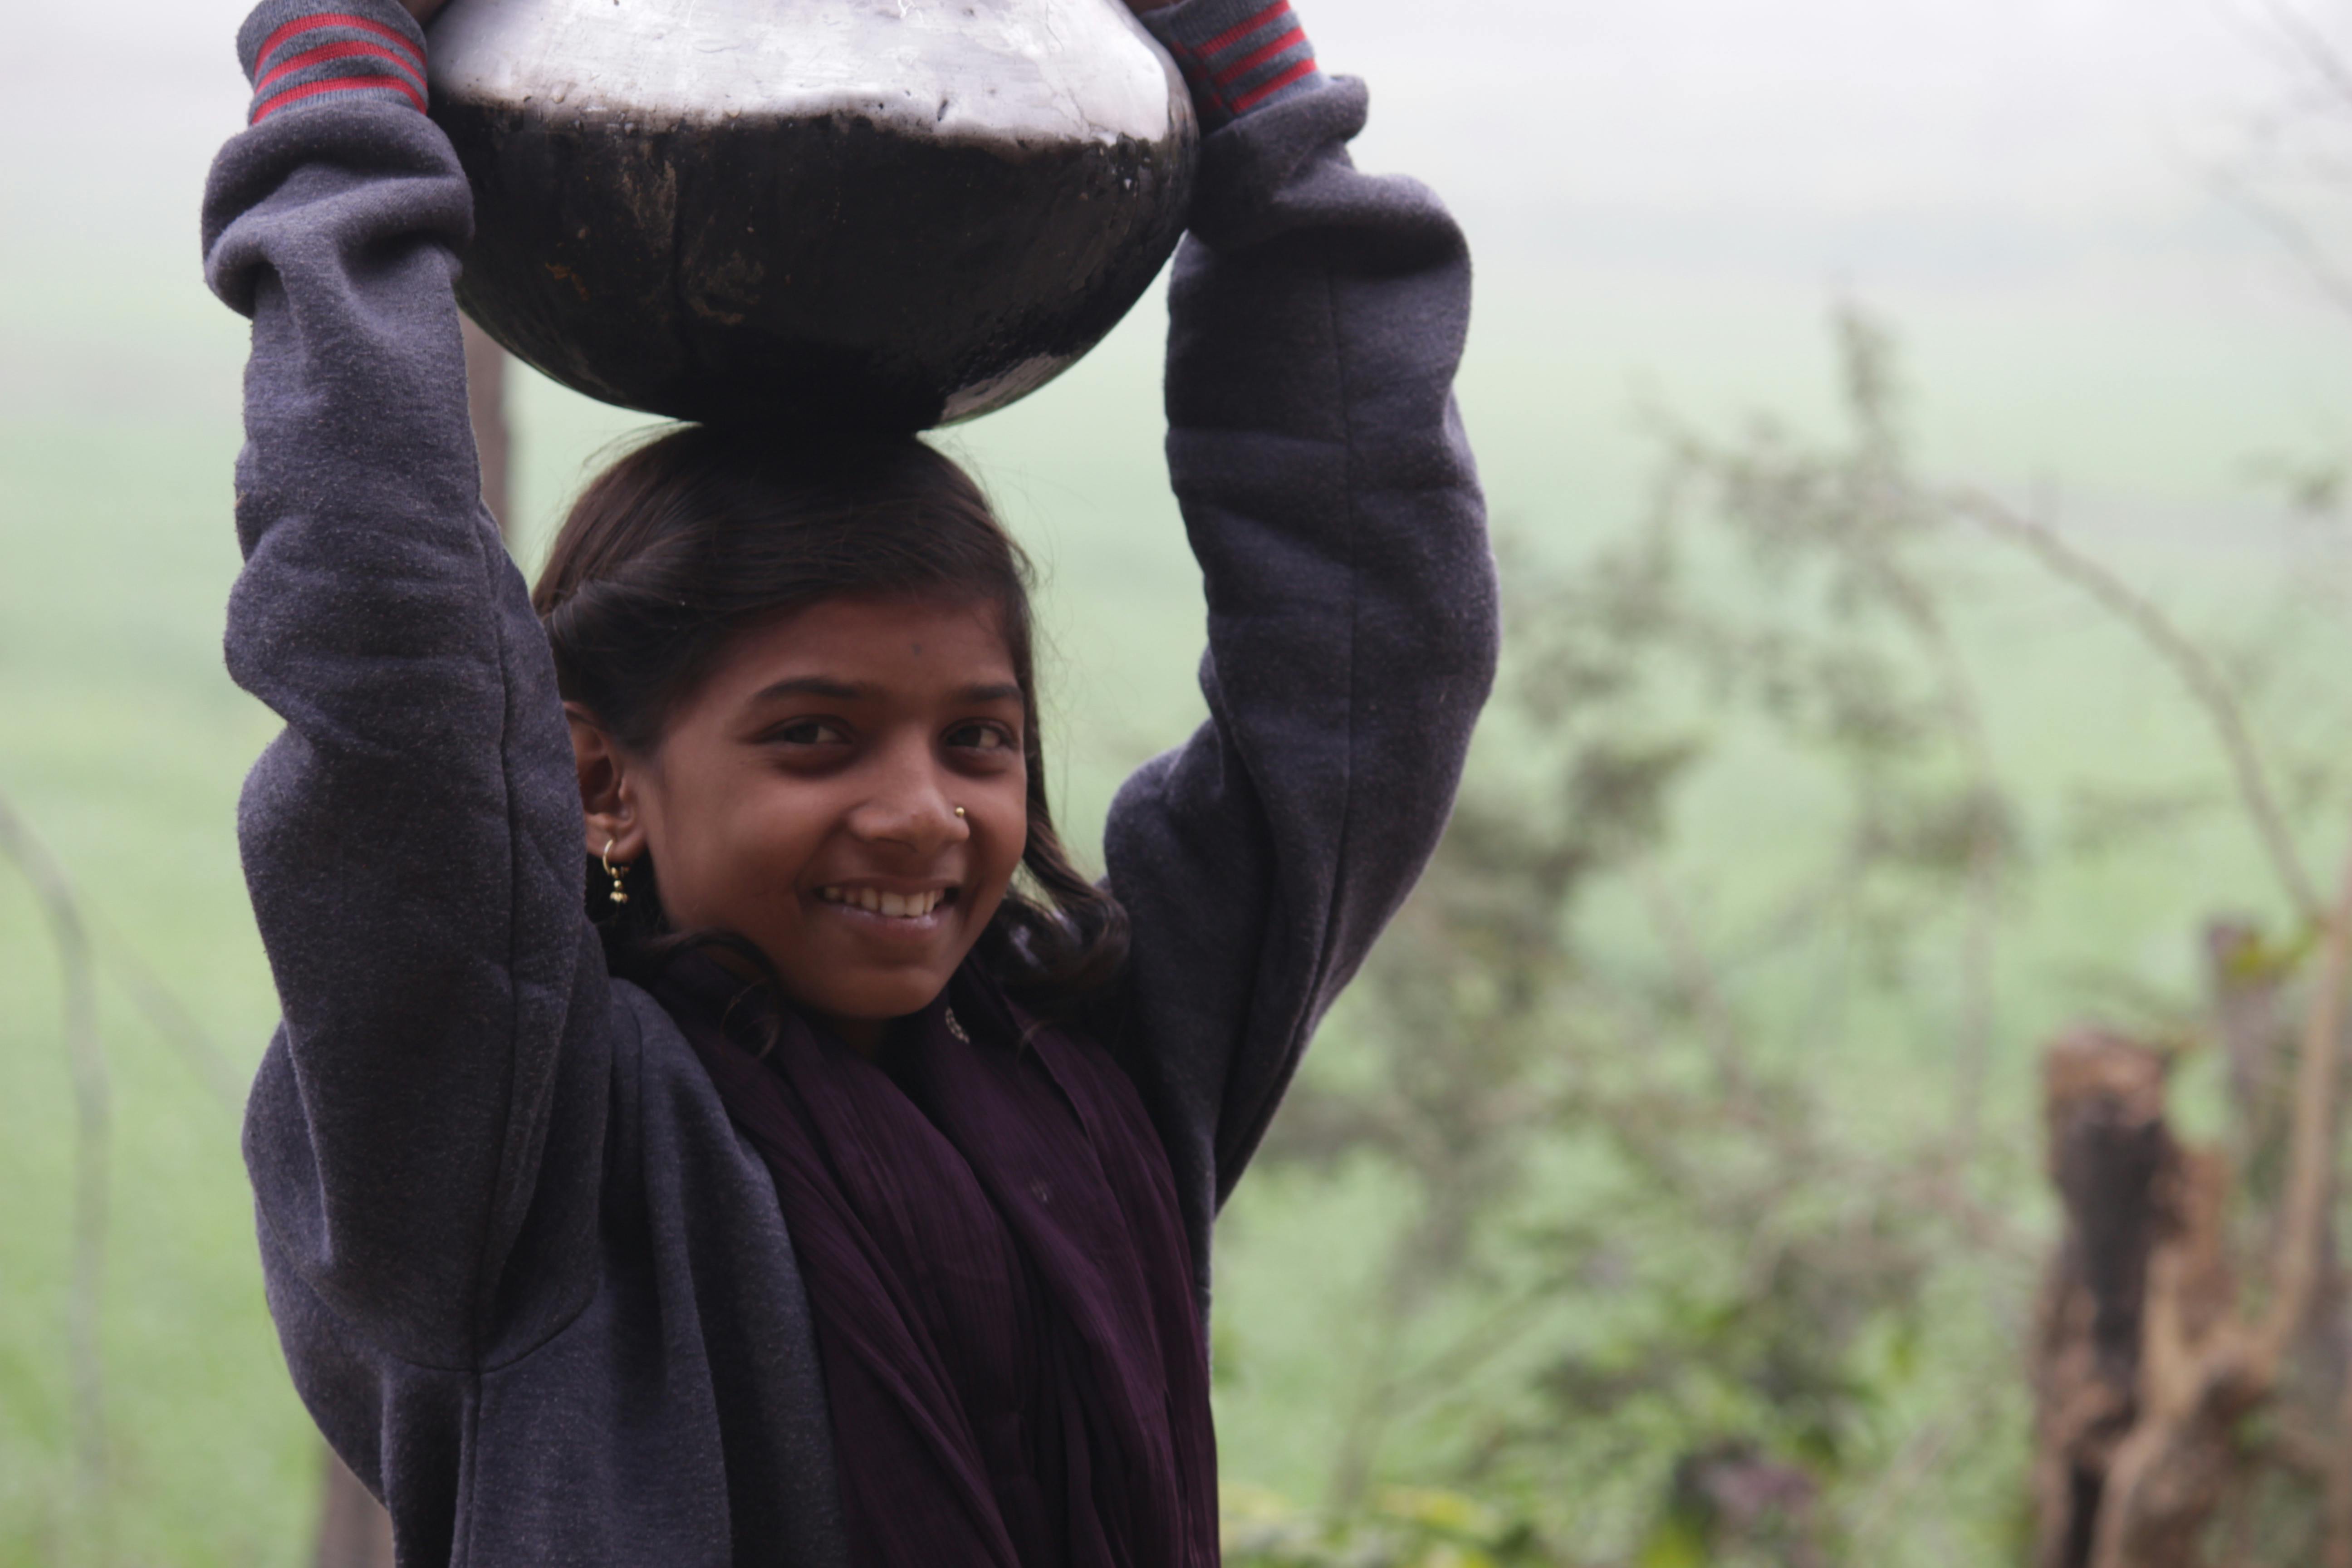 Free stock photo of Indian village girl, Rural Girl, Village of Bihar